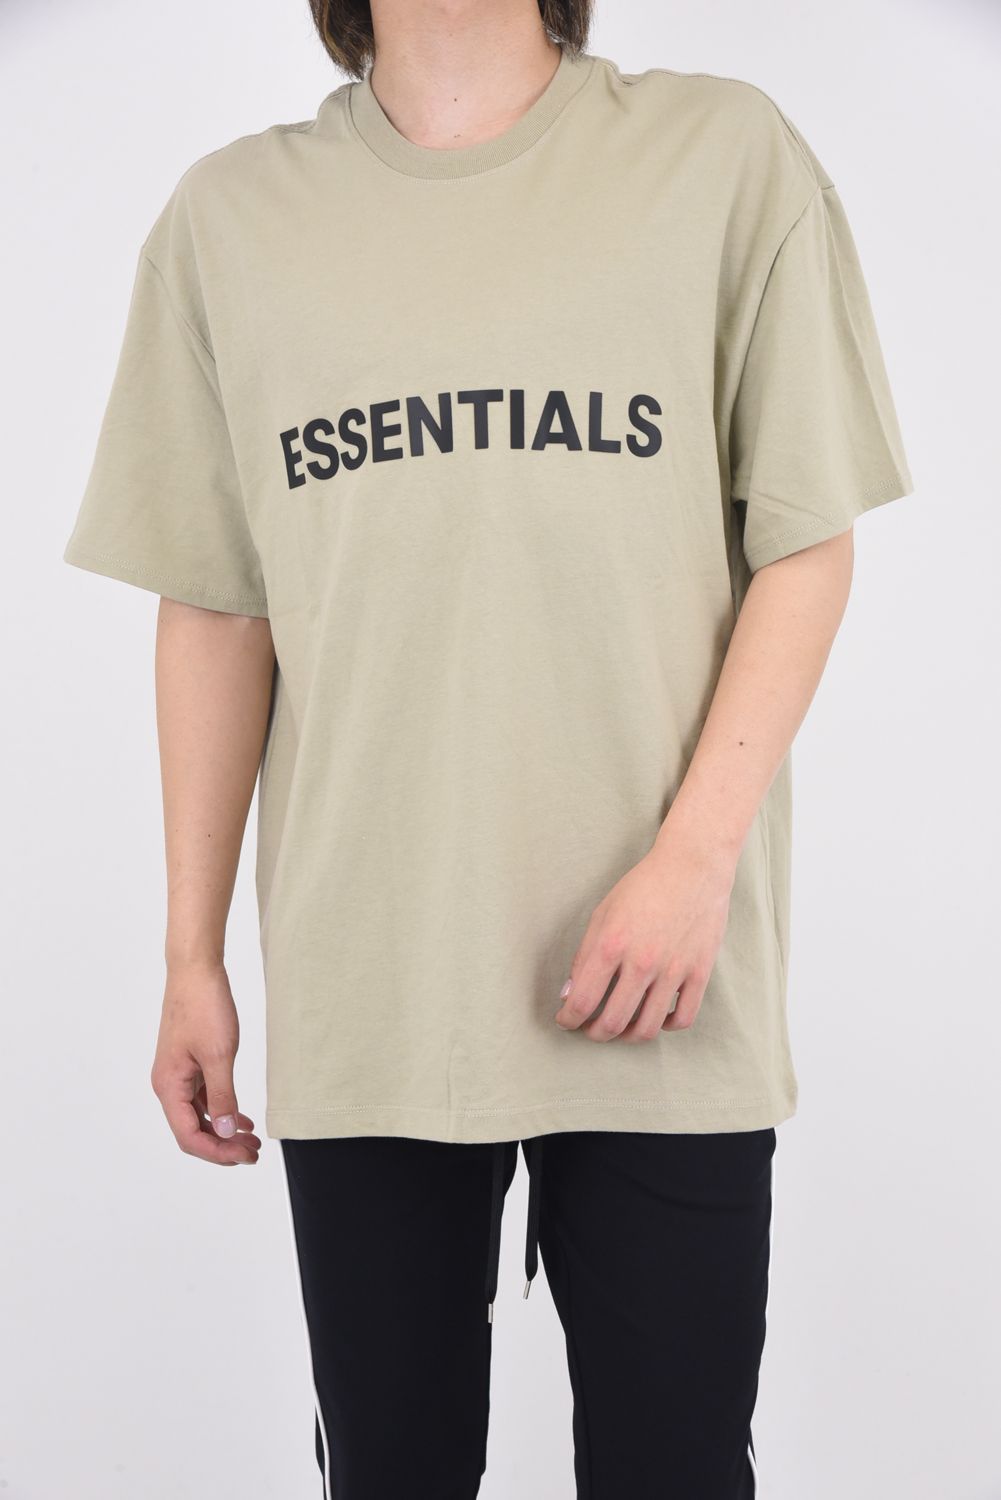 FOG ESSENTIALS フロントロゴ Tシャツ ピンク / Mサイズ